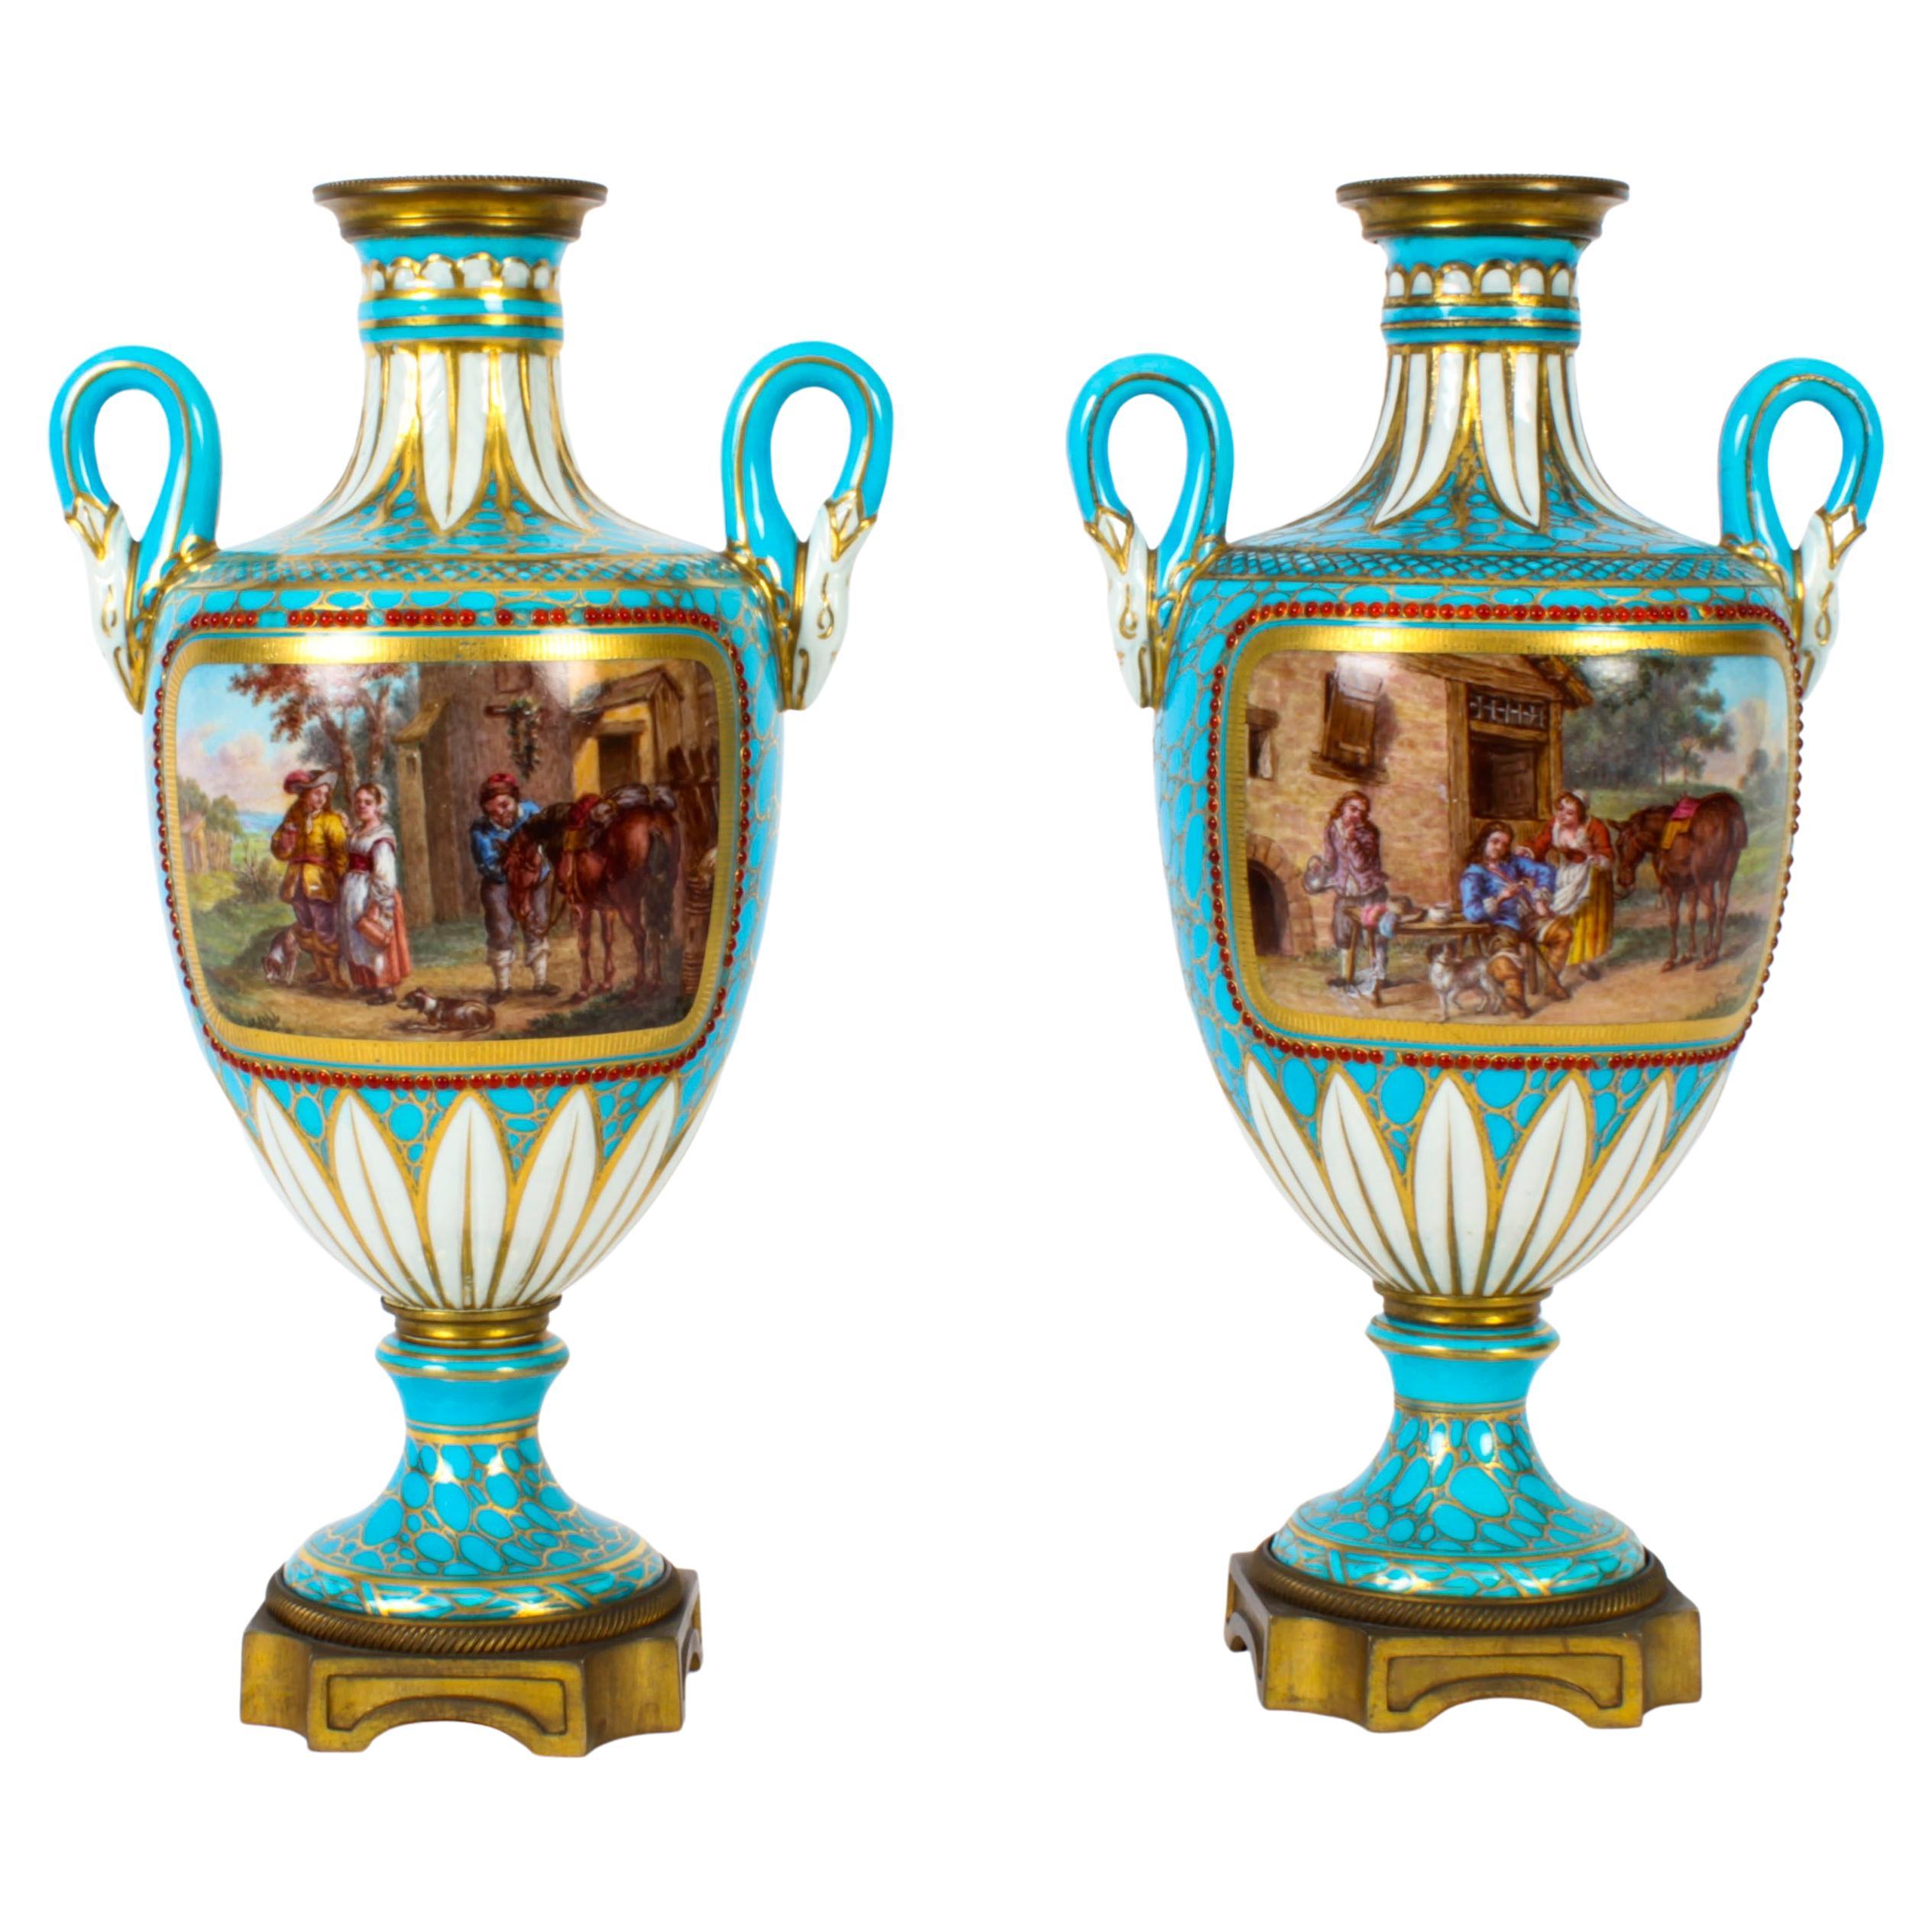 Antique Pair of French Bleu Celeste Porcelain Urns 19th Century